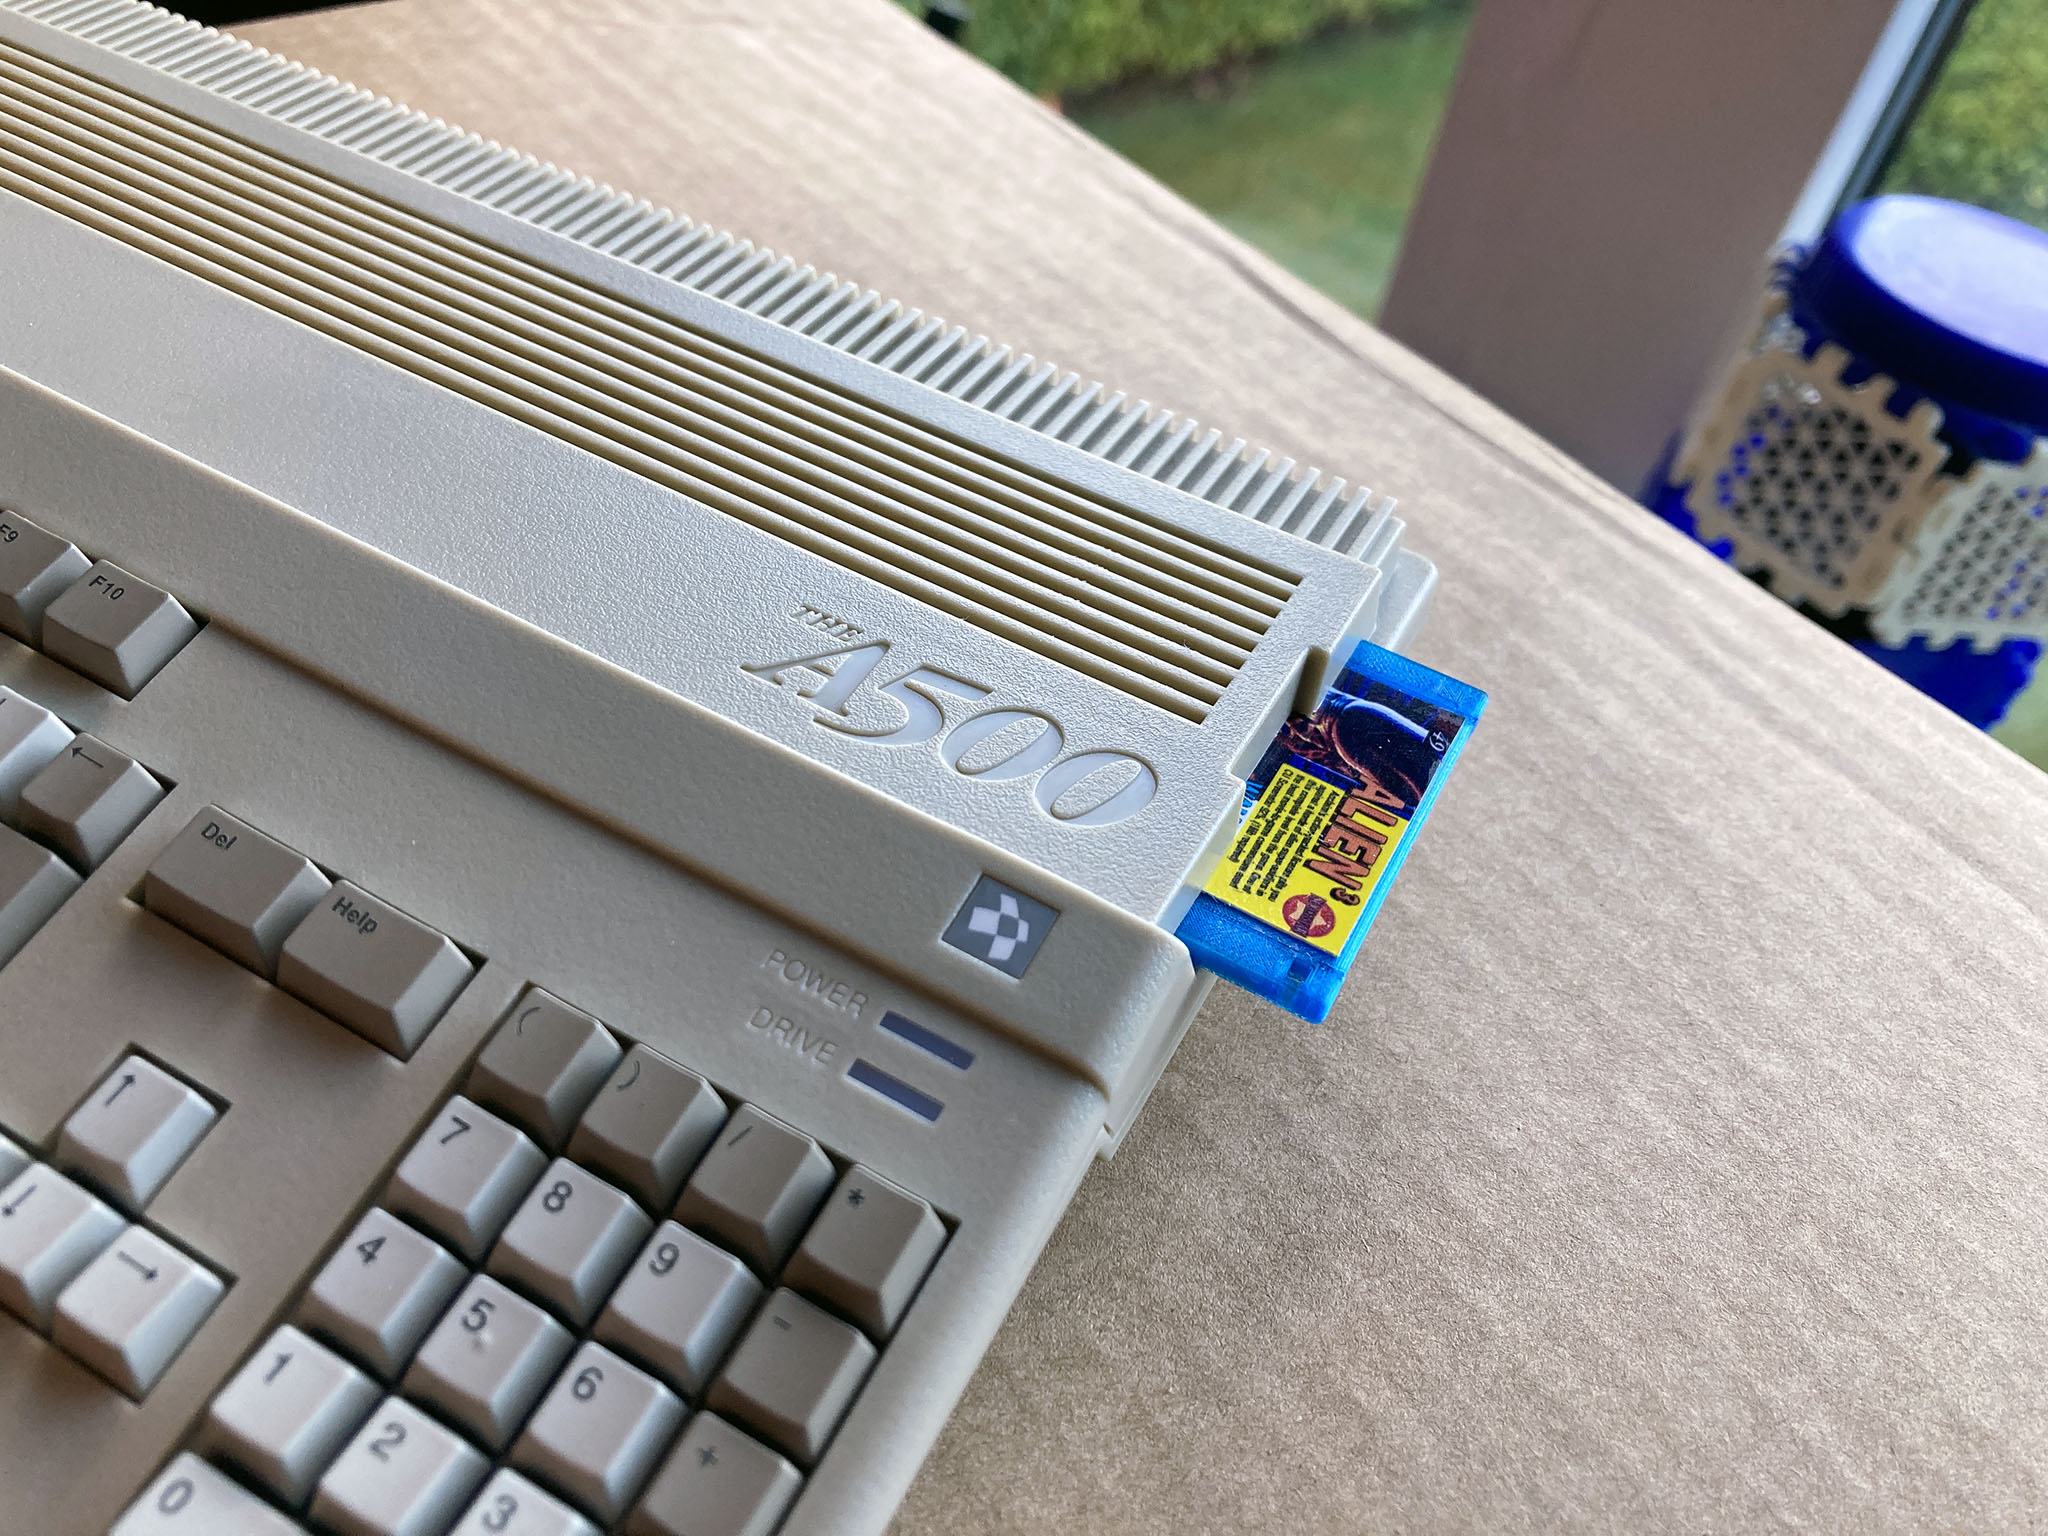 Amiga 500 Mini - (A500 Mini) Display Stand by RetromanIE